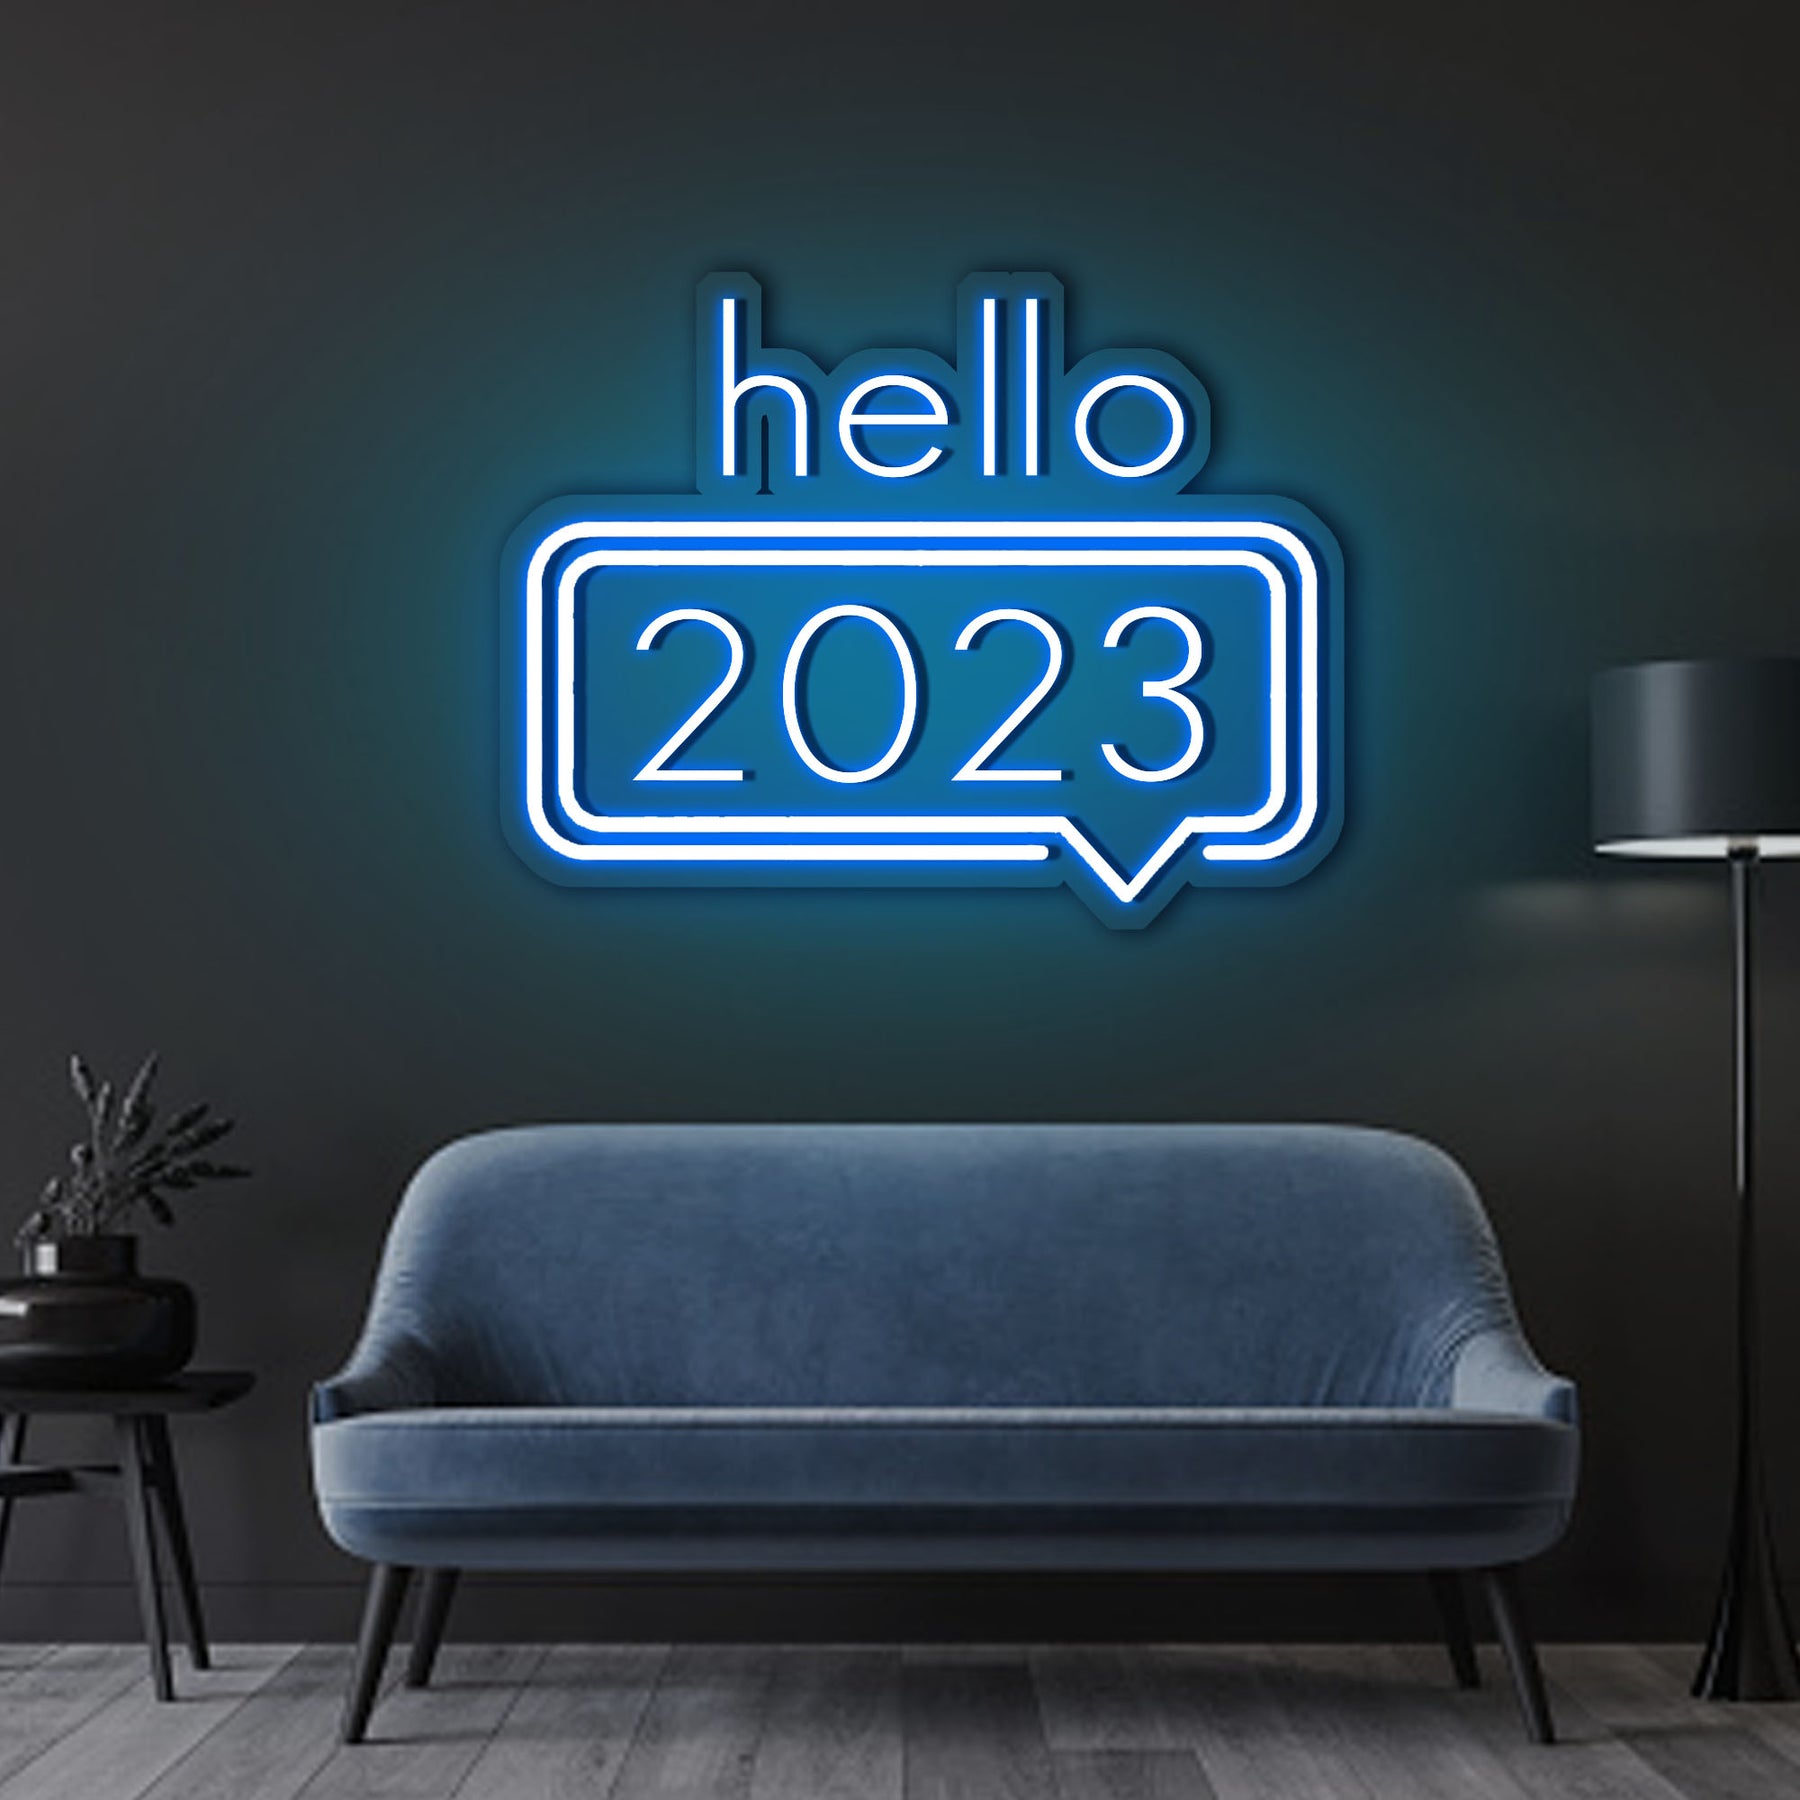 HELLO 2023 Neon Sign